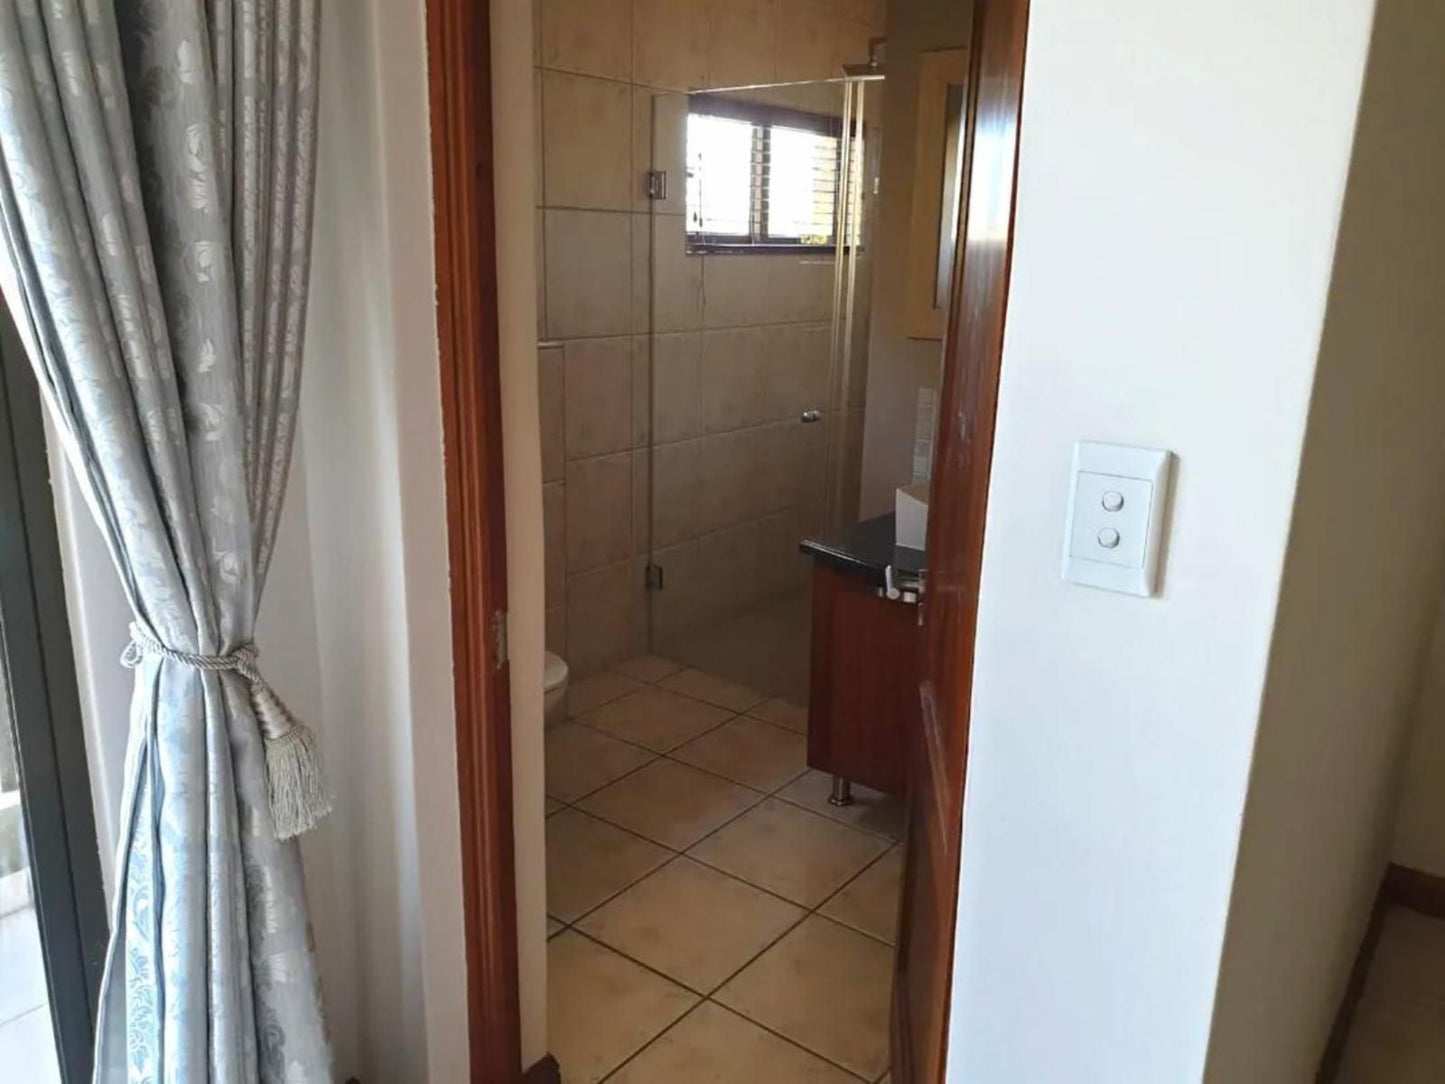 Silver Streams Modimolle Modimolle Nylstroom Limpopo Province South Africa Bathroom